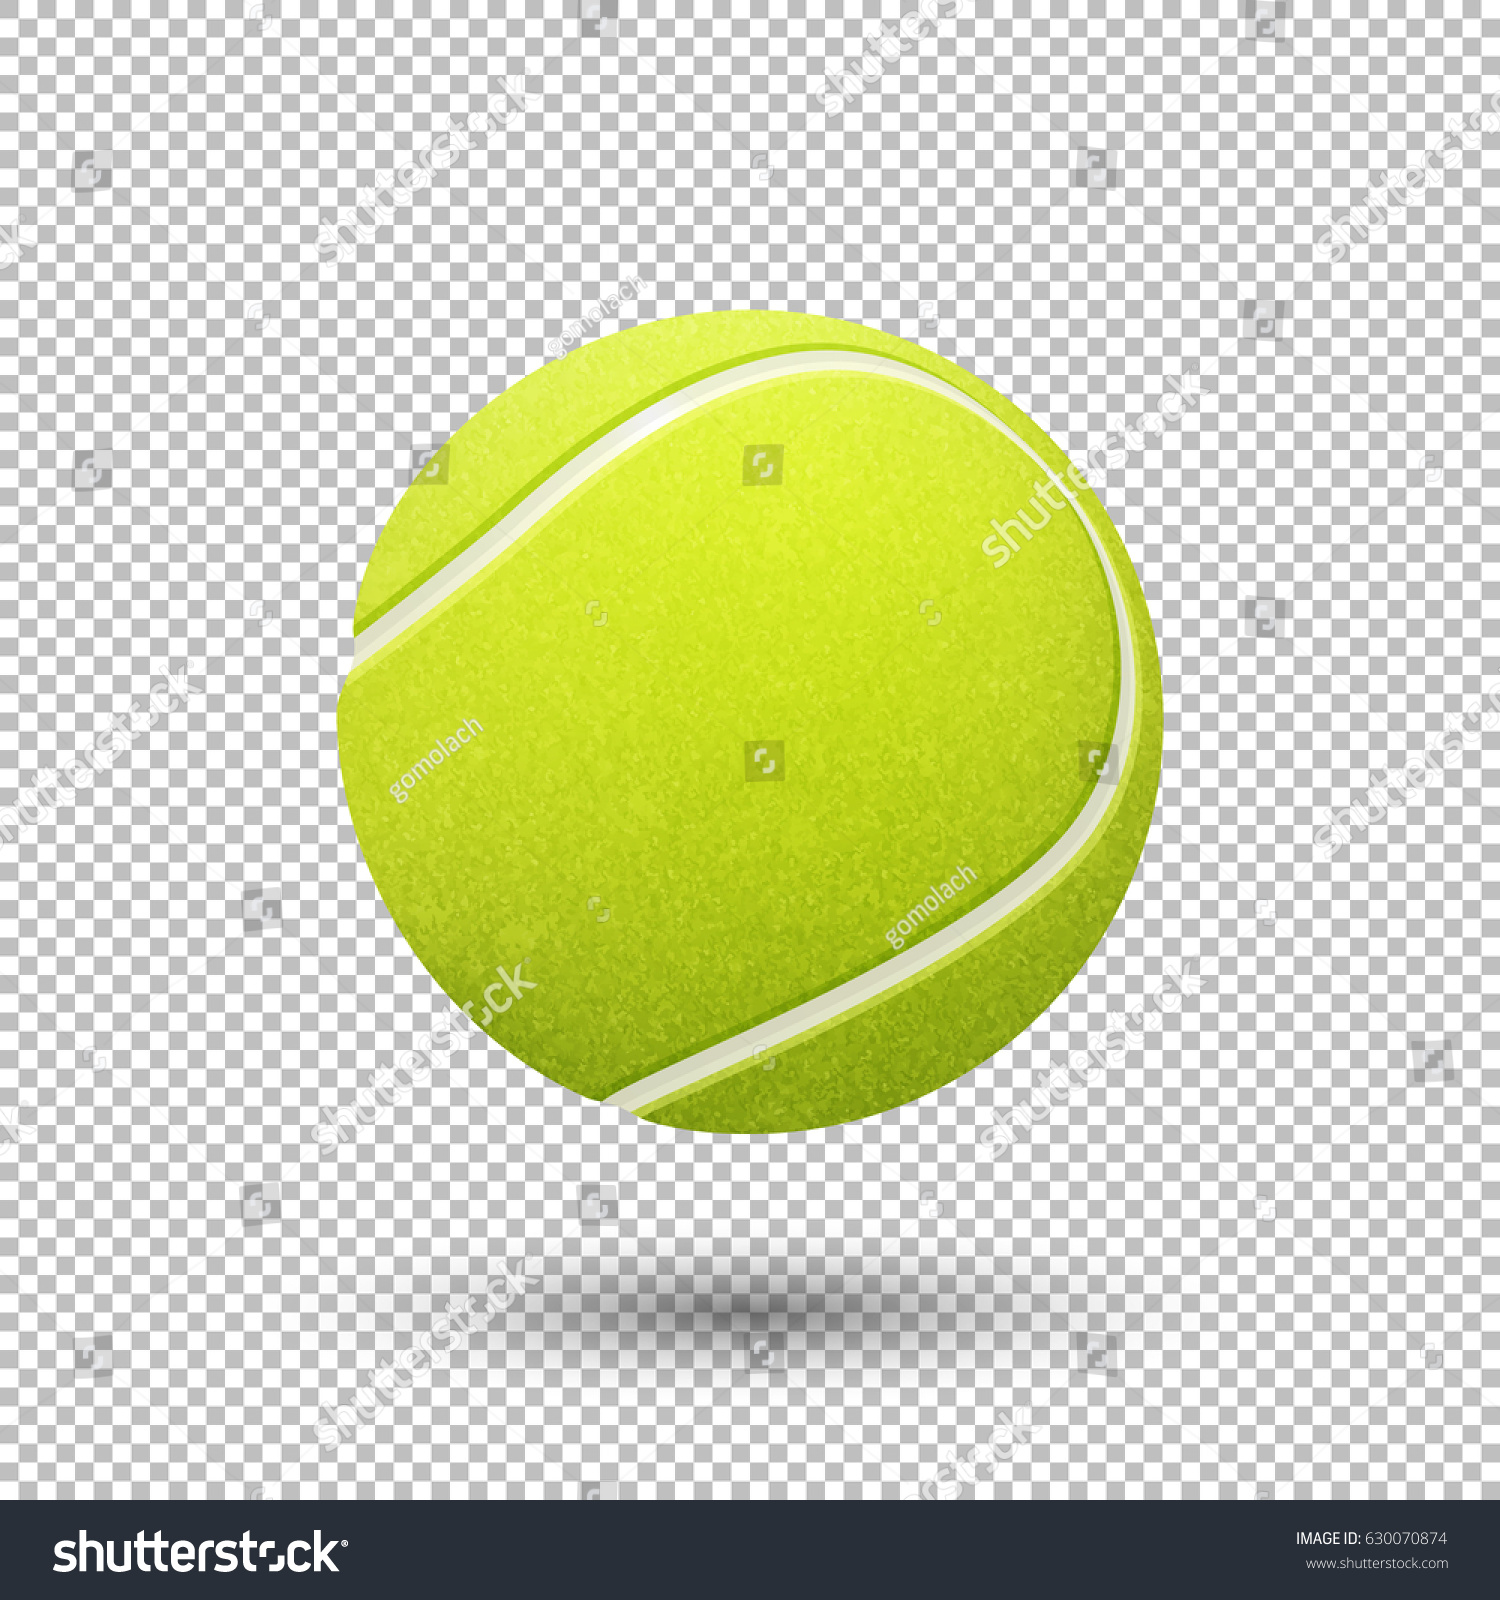 Vector Realistic Flying Tennis Ball Closeup Stock Vector (Royalty Free ...